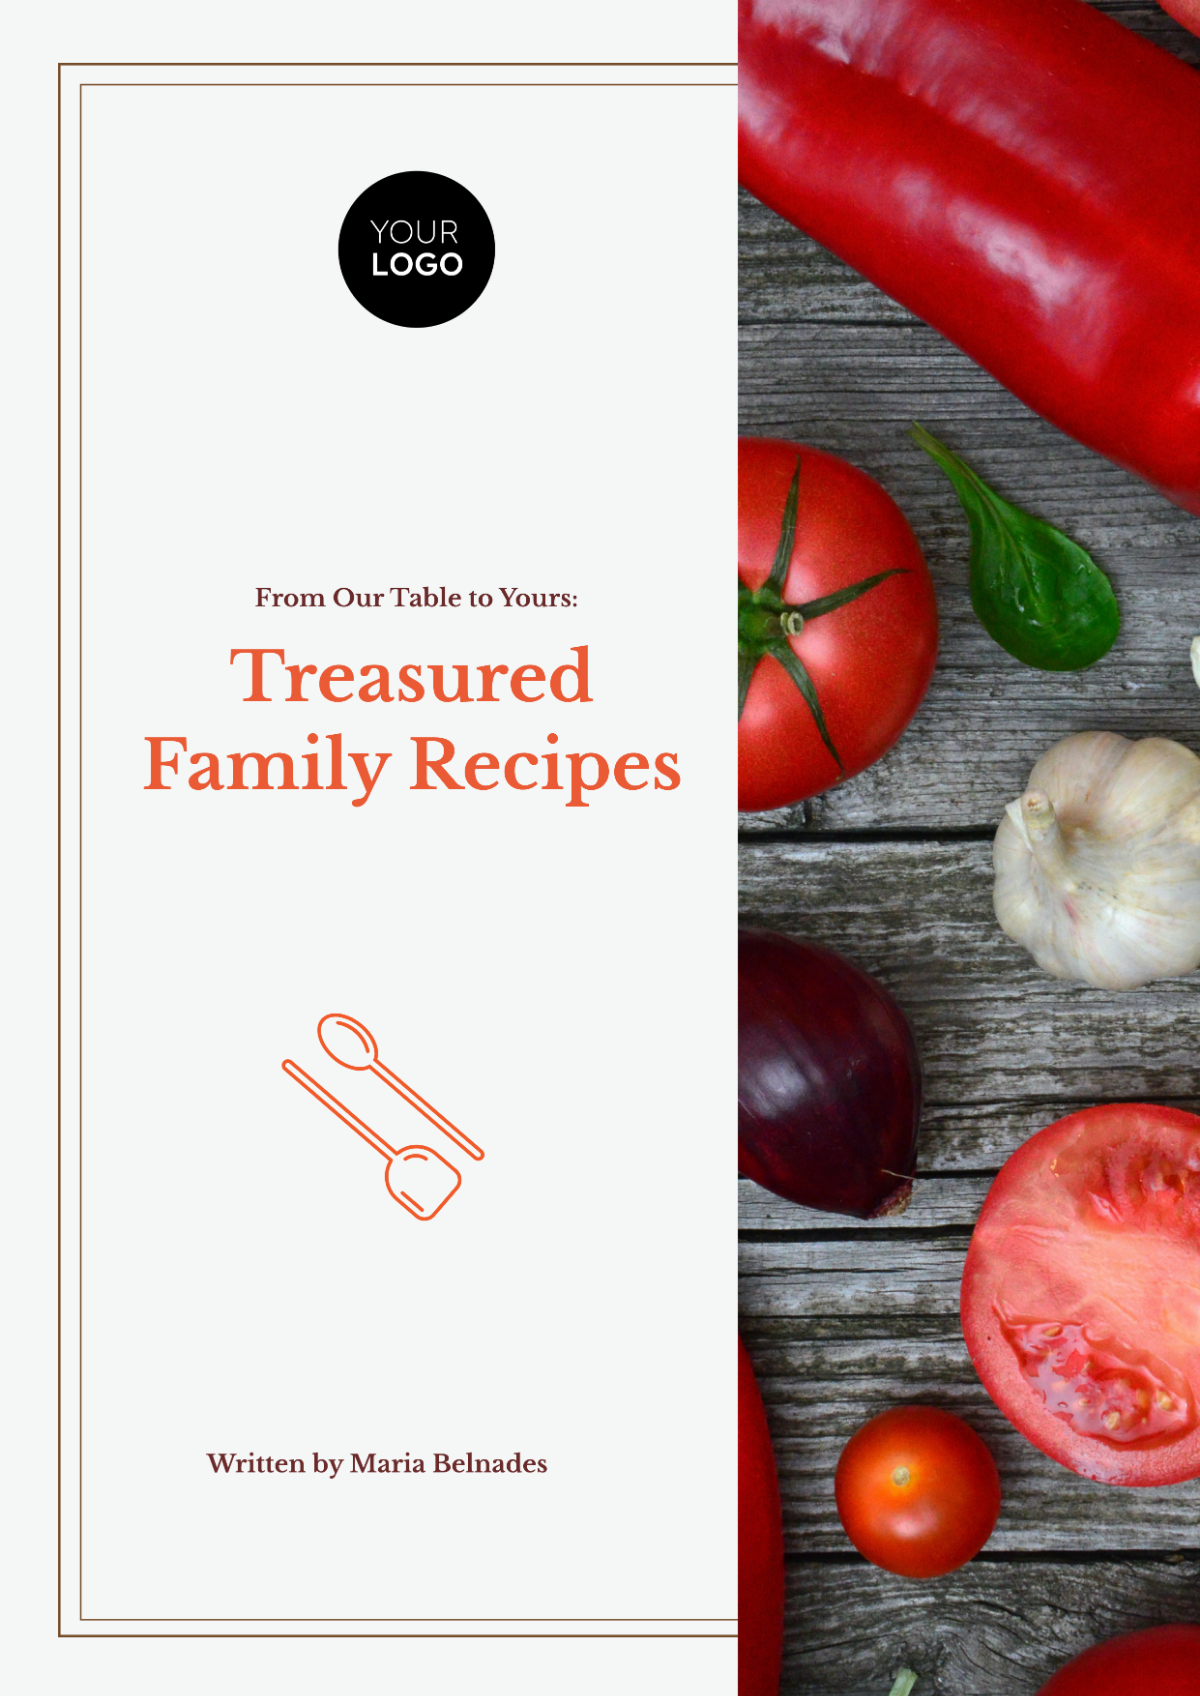 Family Cookbook Template